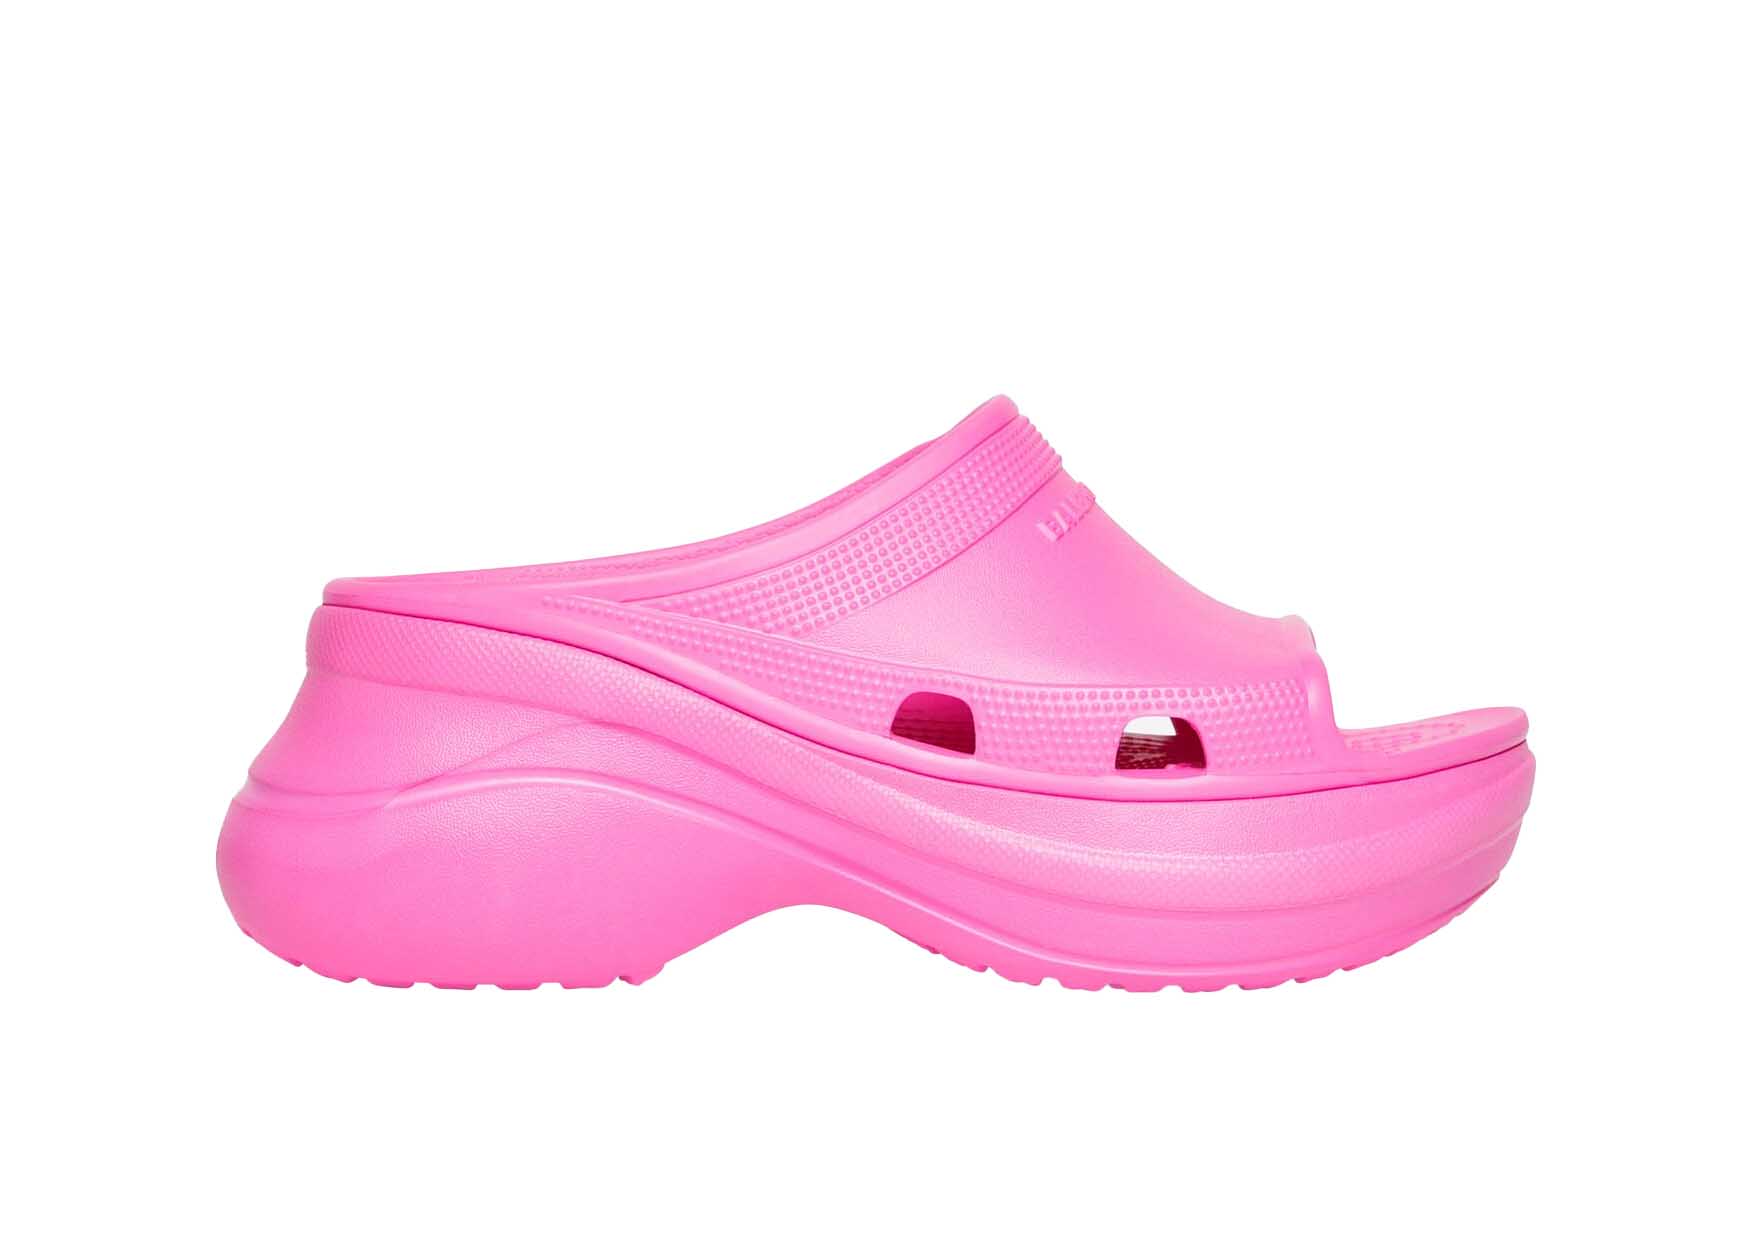 Balenciaga x Crocs Pool Slide Sandals Pink (Women's